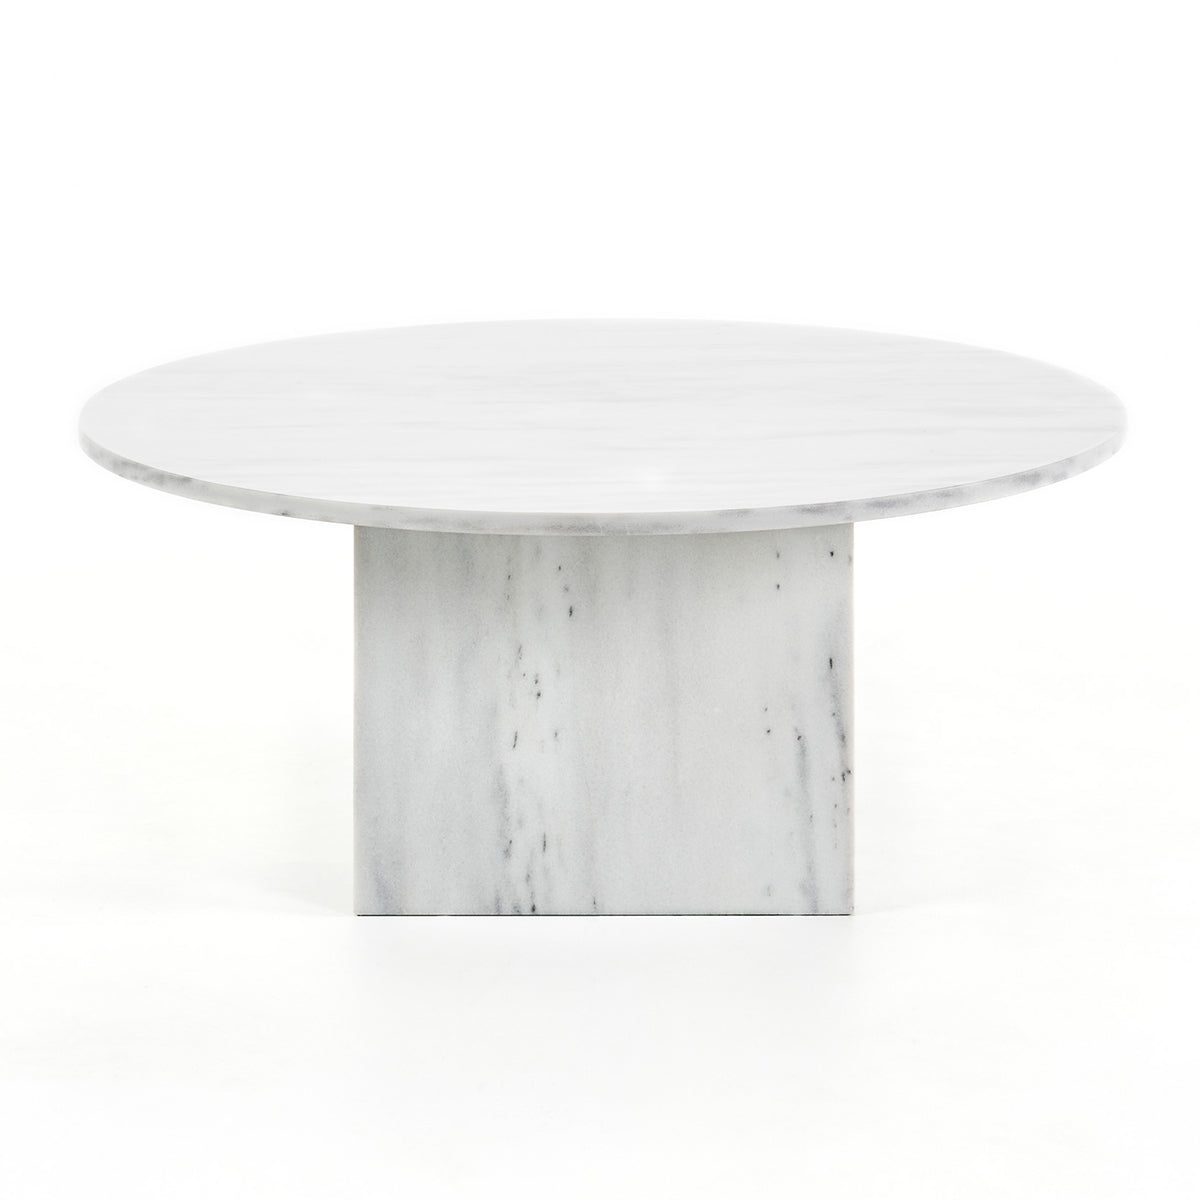 Vixen Coffee Table (White).